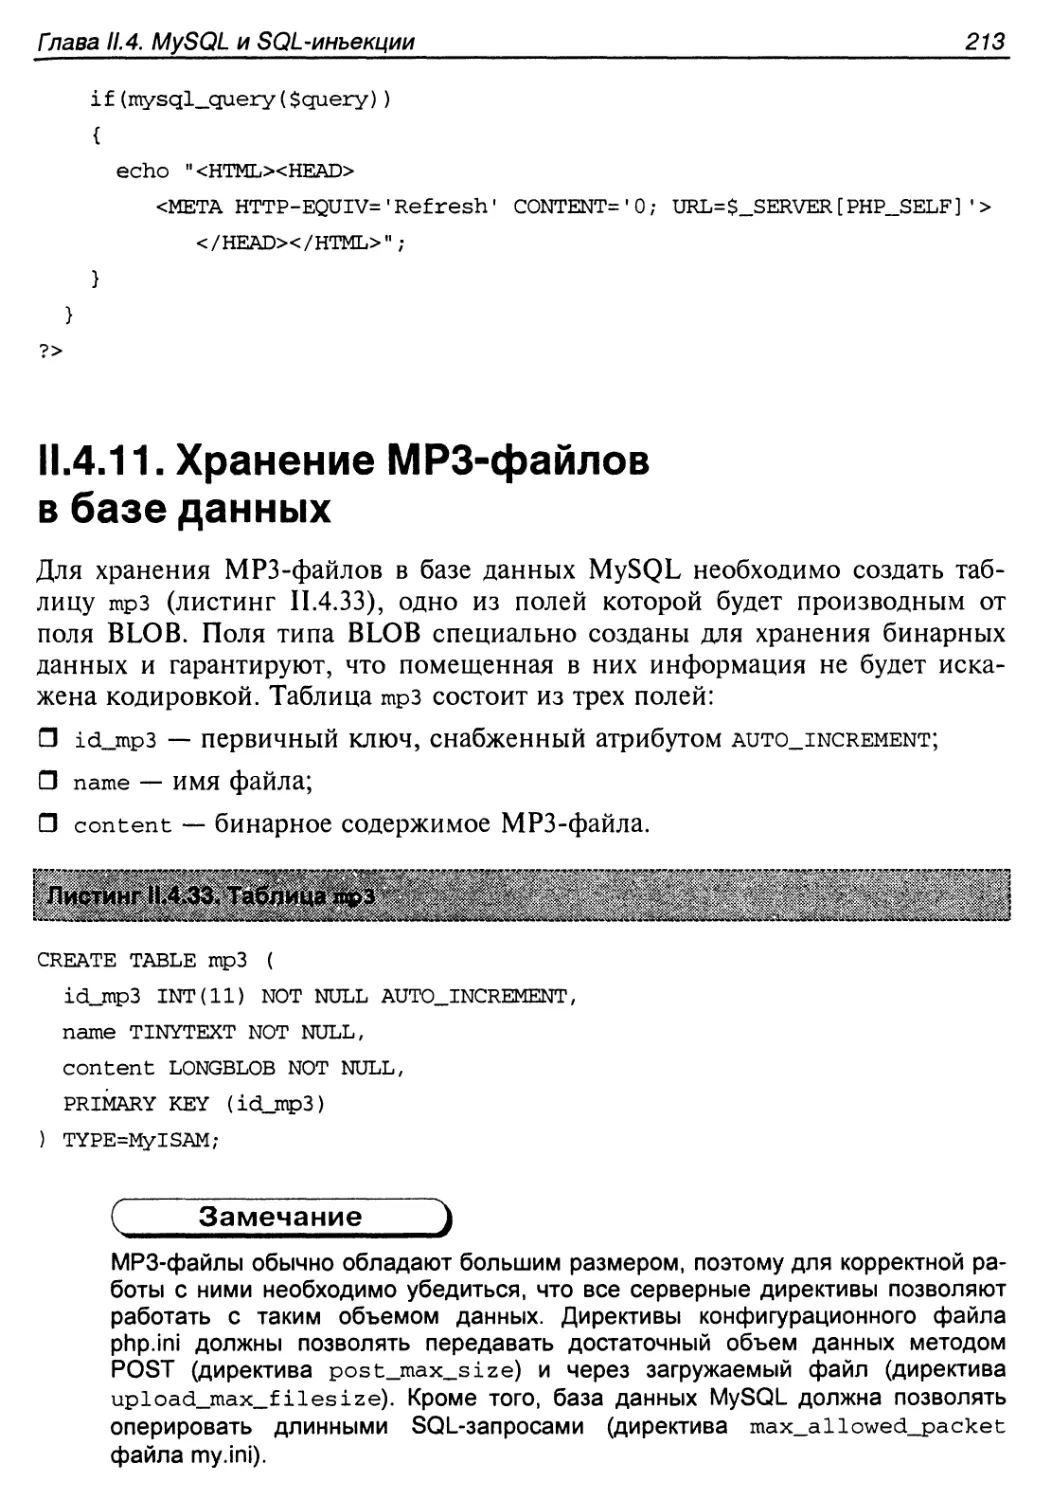 II.4.11. Хранение МРЗ-файлов в базе данных